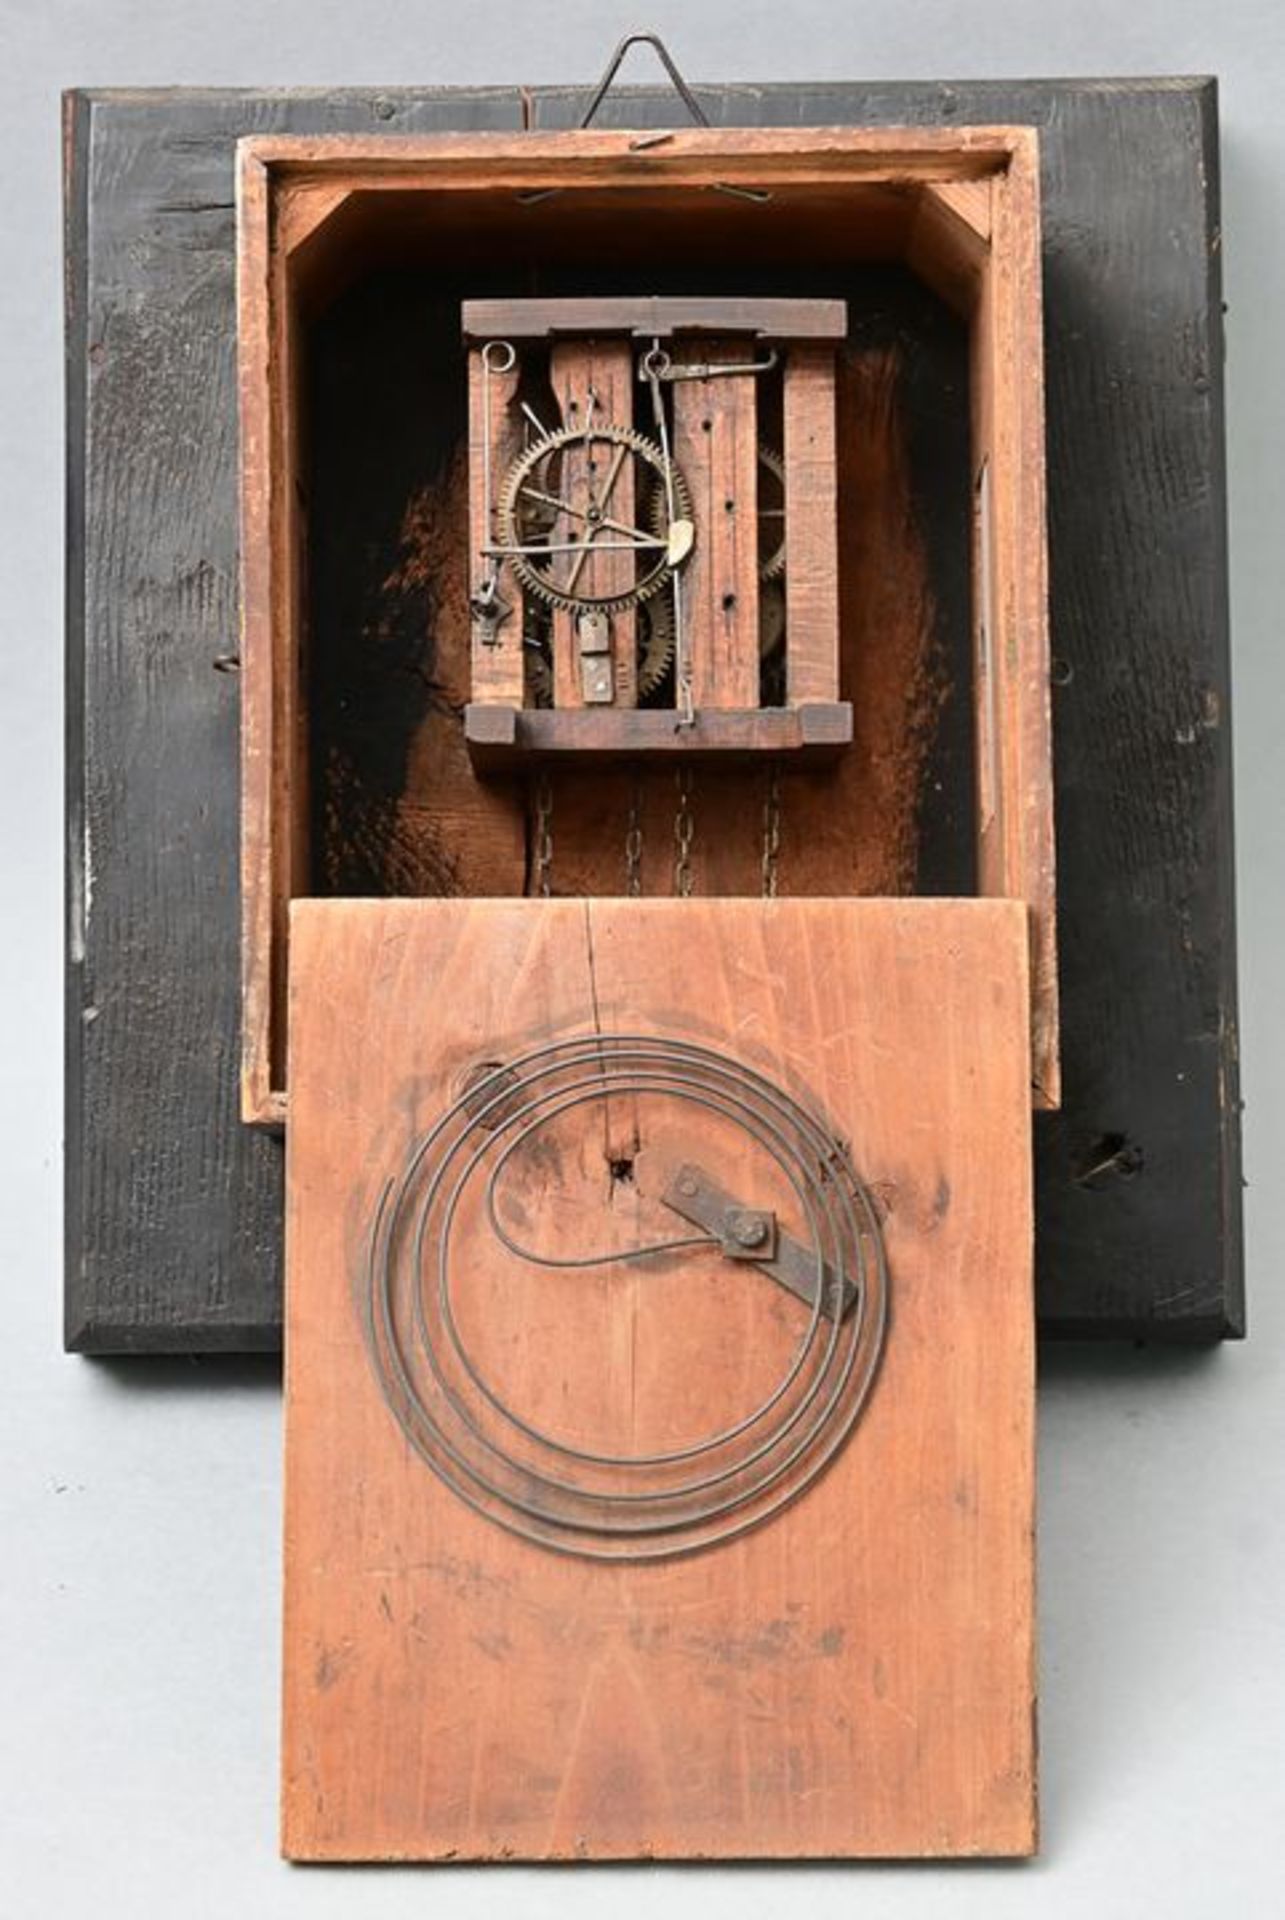 Rahmenuhr / wall clock - Image 3 of 3